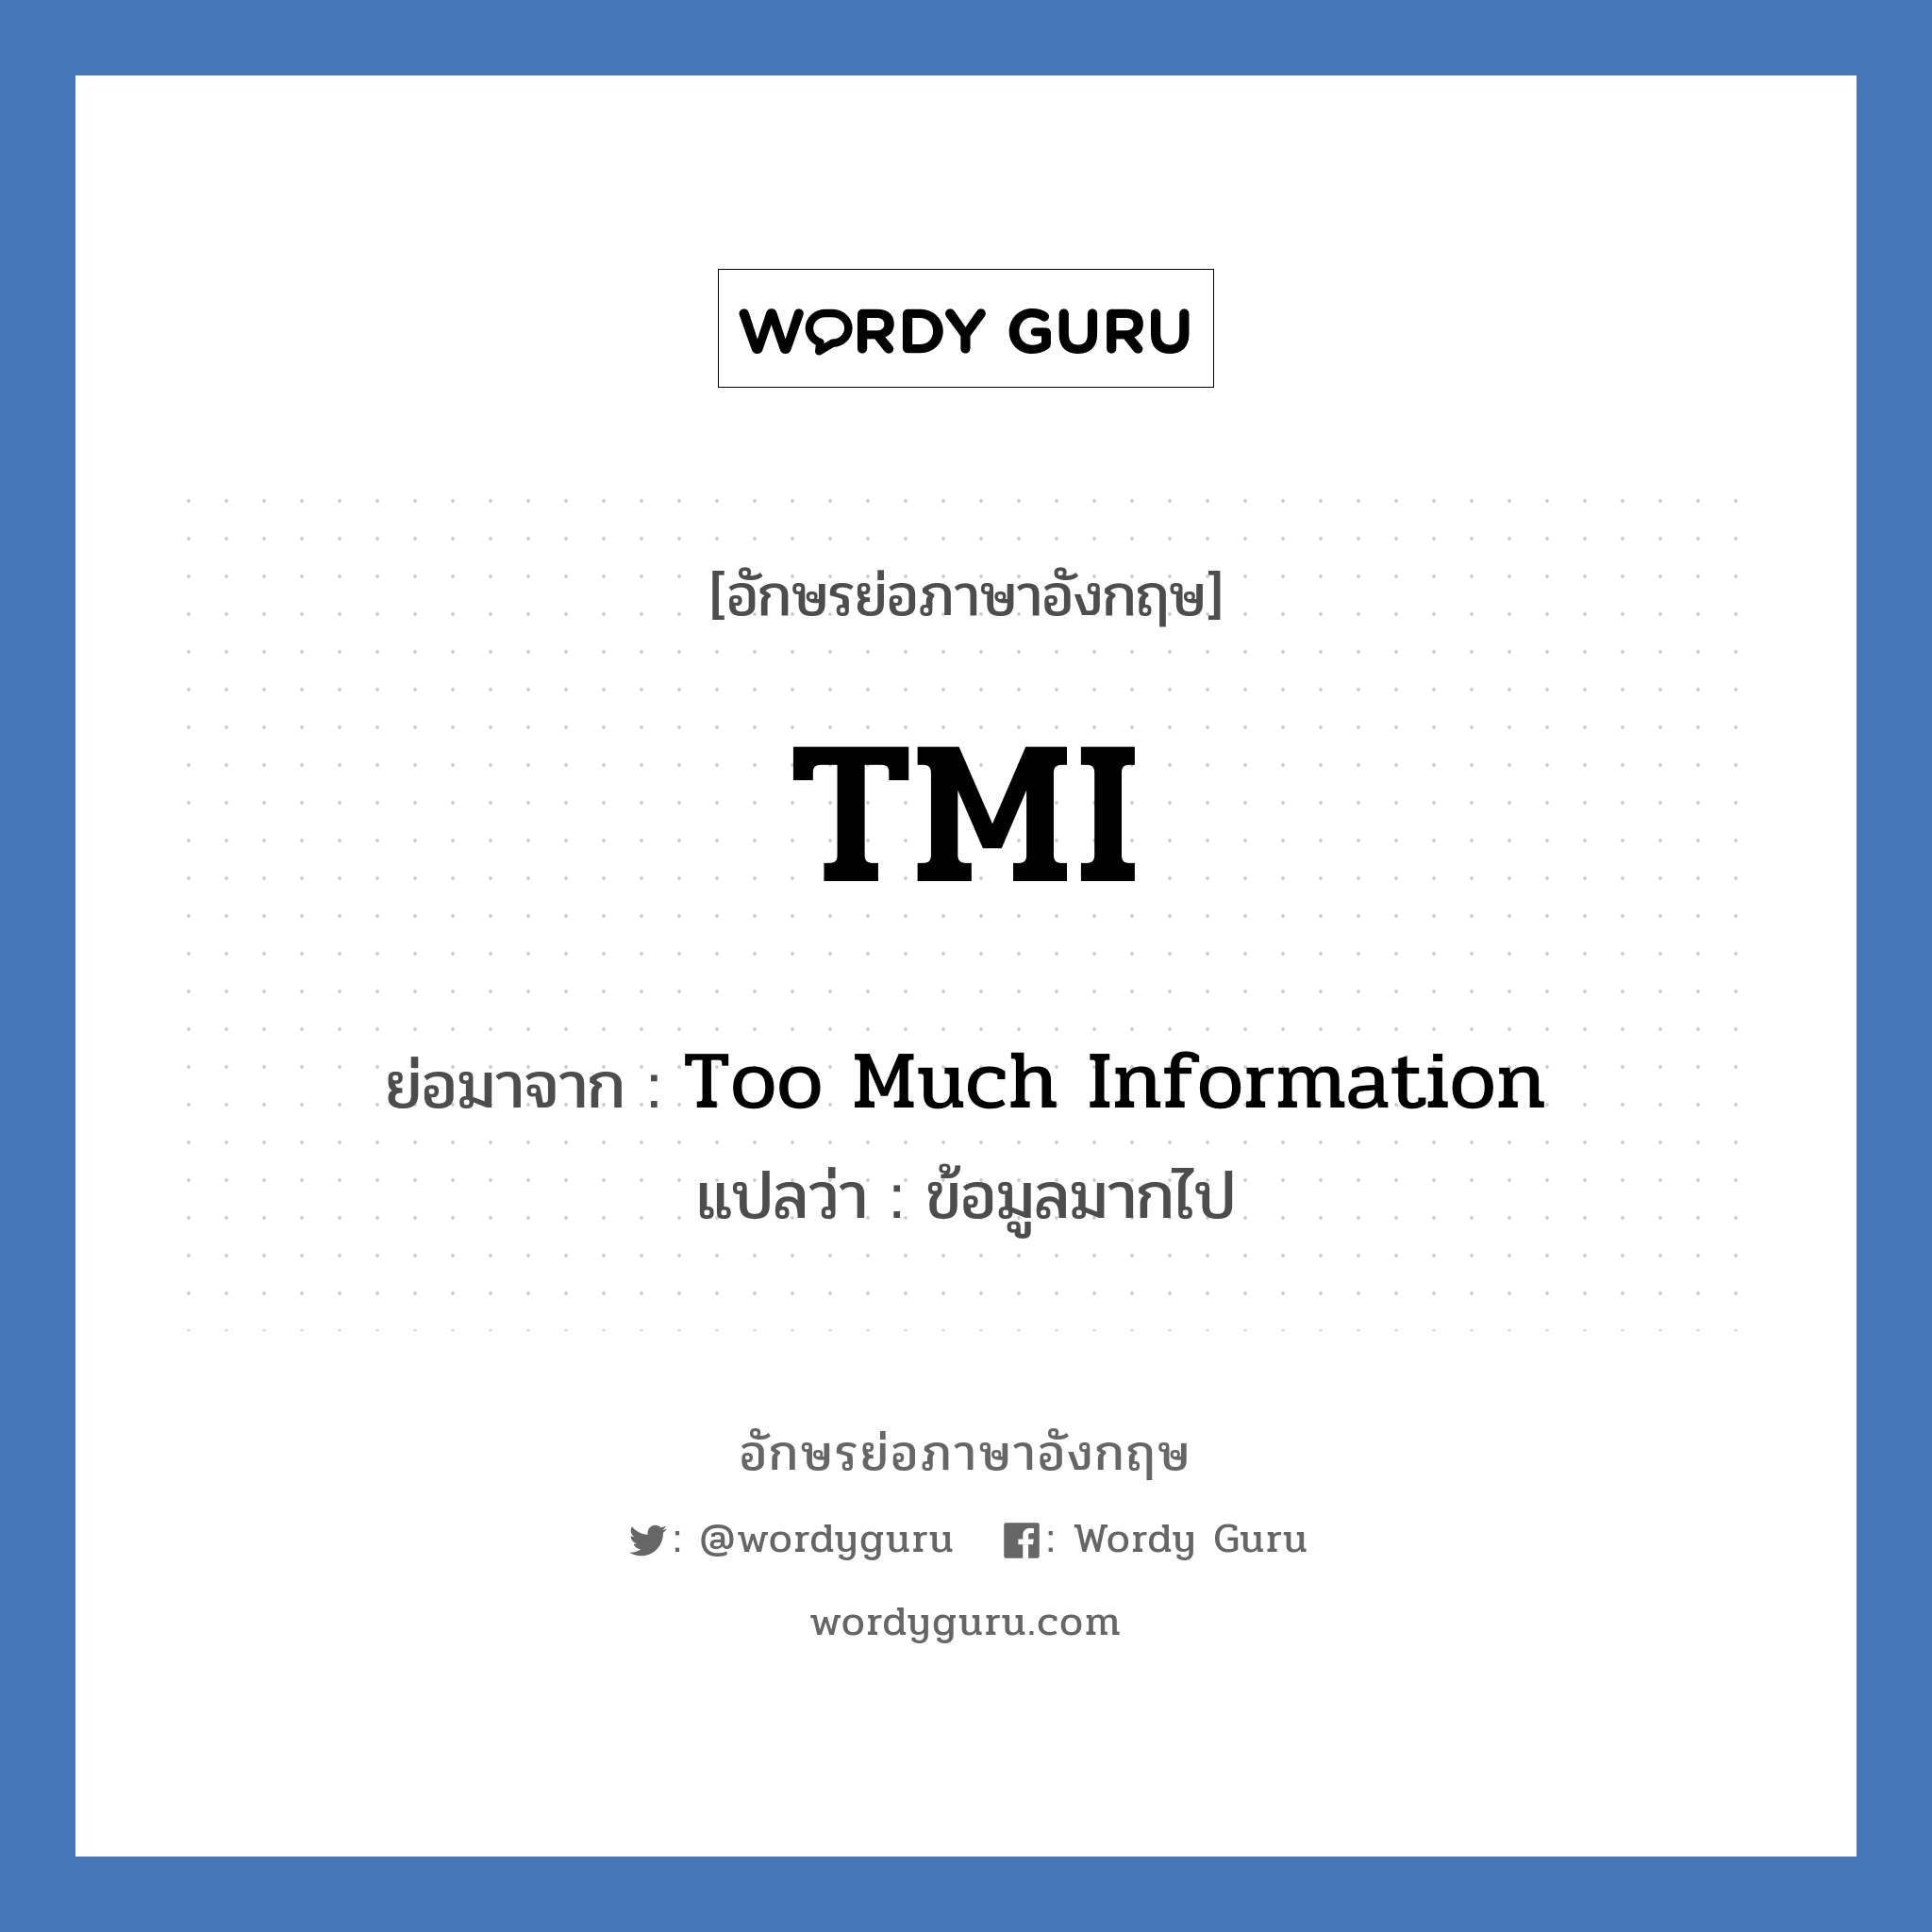 TMI ย่อมาจาก? แปลว่า?, อักษรย่อภาษาอังกฤษ TMI ย่อมาจาก Too Much Information แปลว่า ข้อมูลมากไป